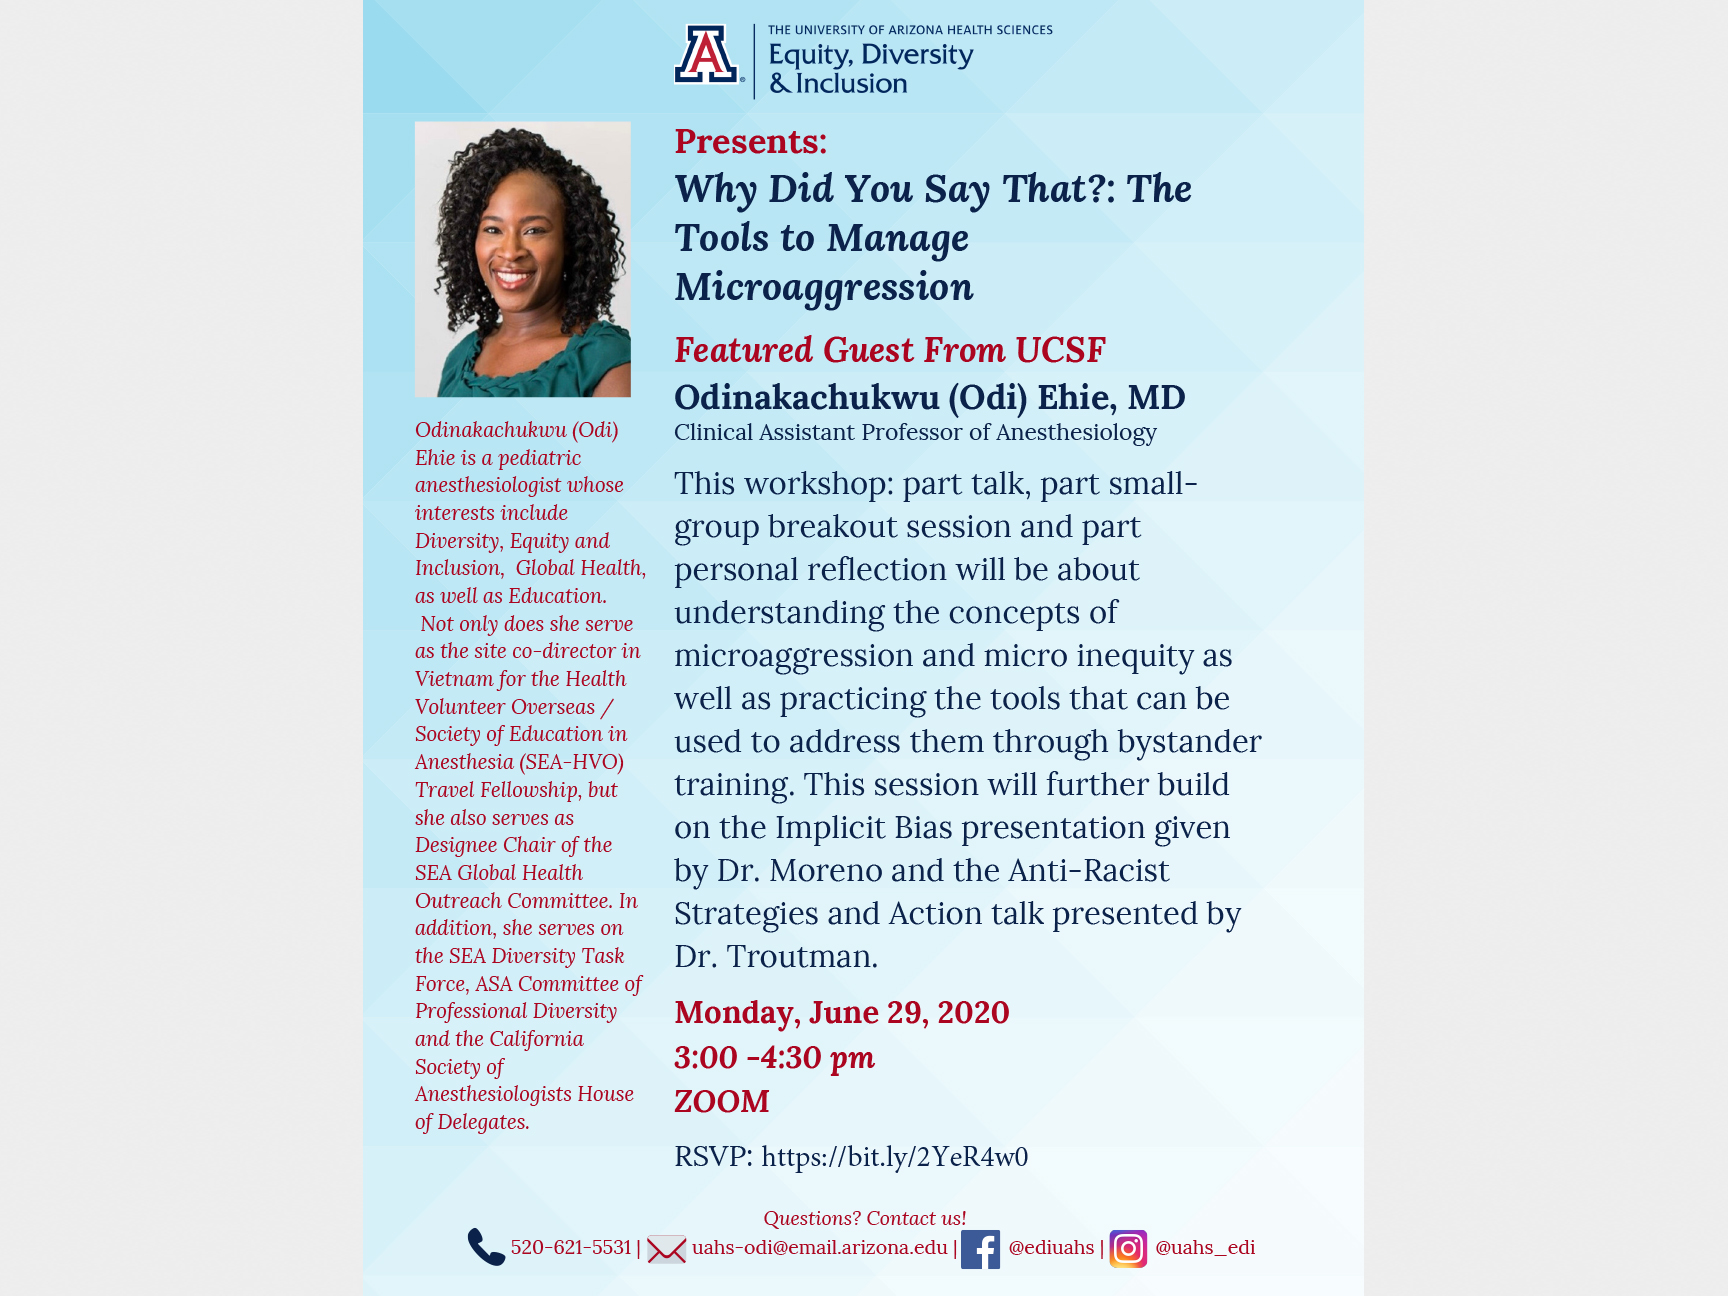 Flyer for the University of Arizona workshop